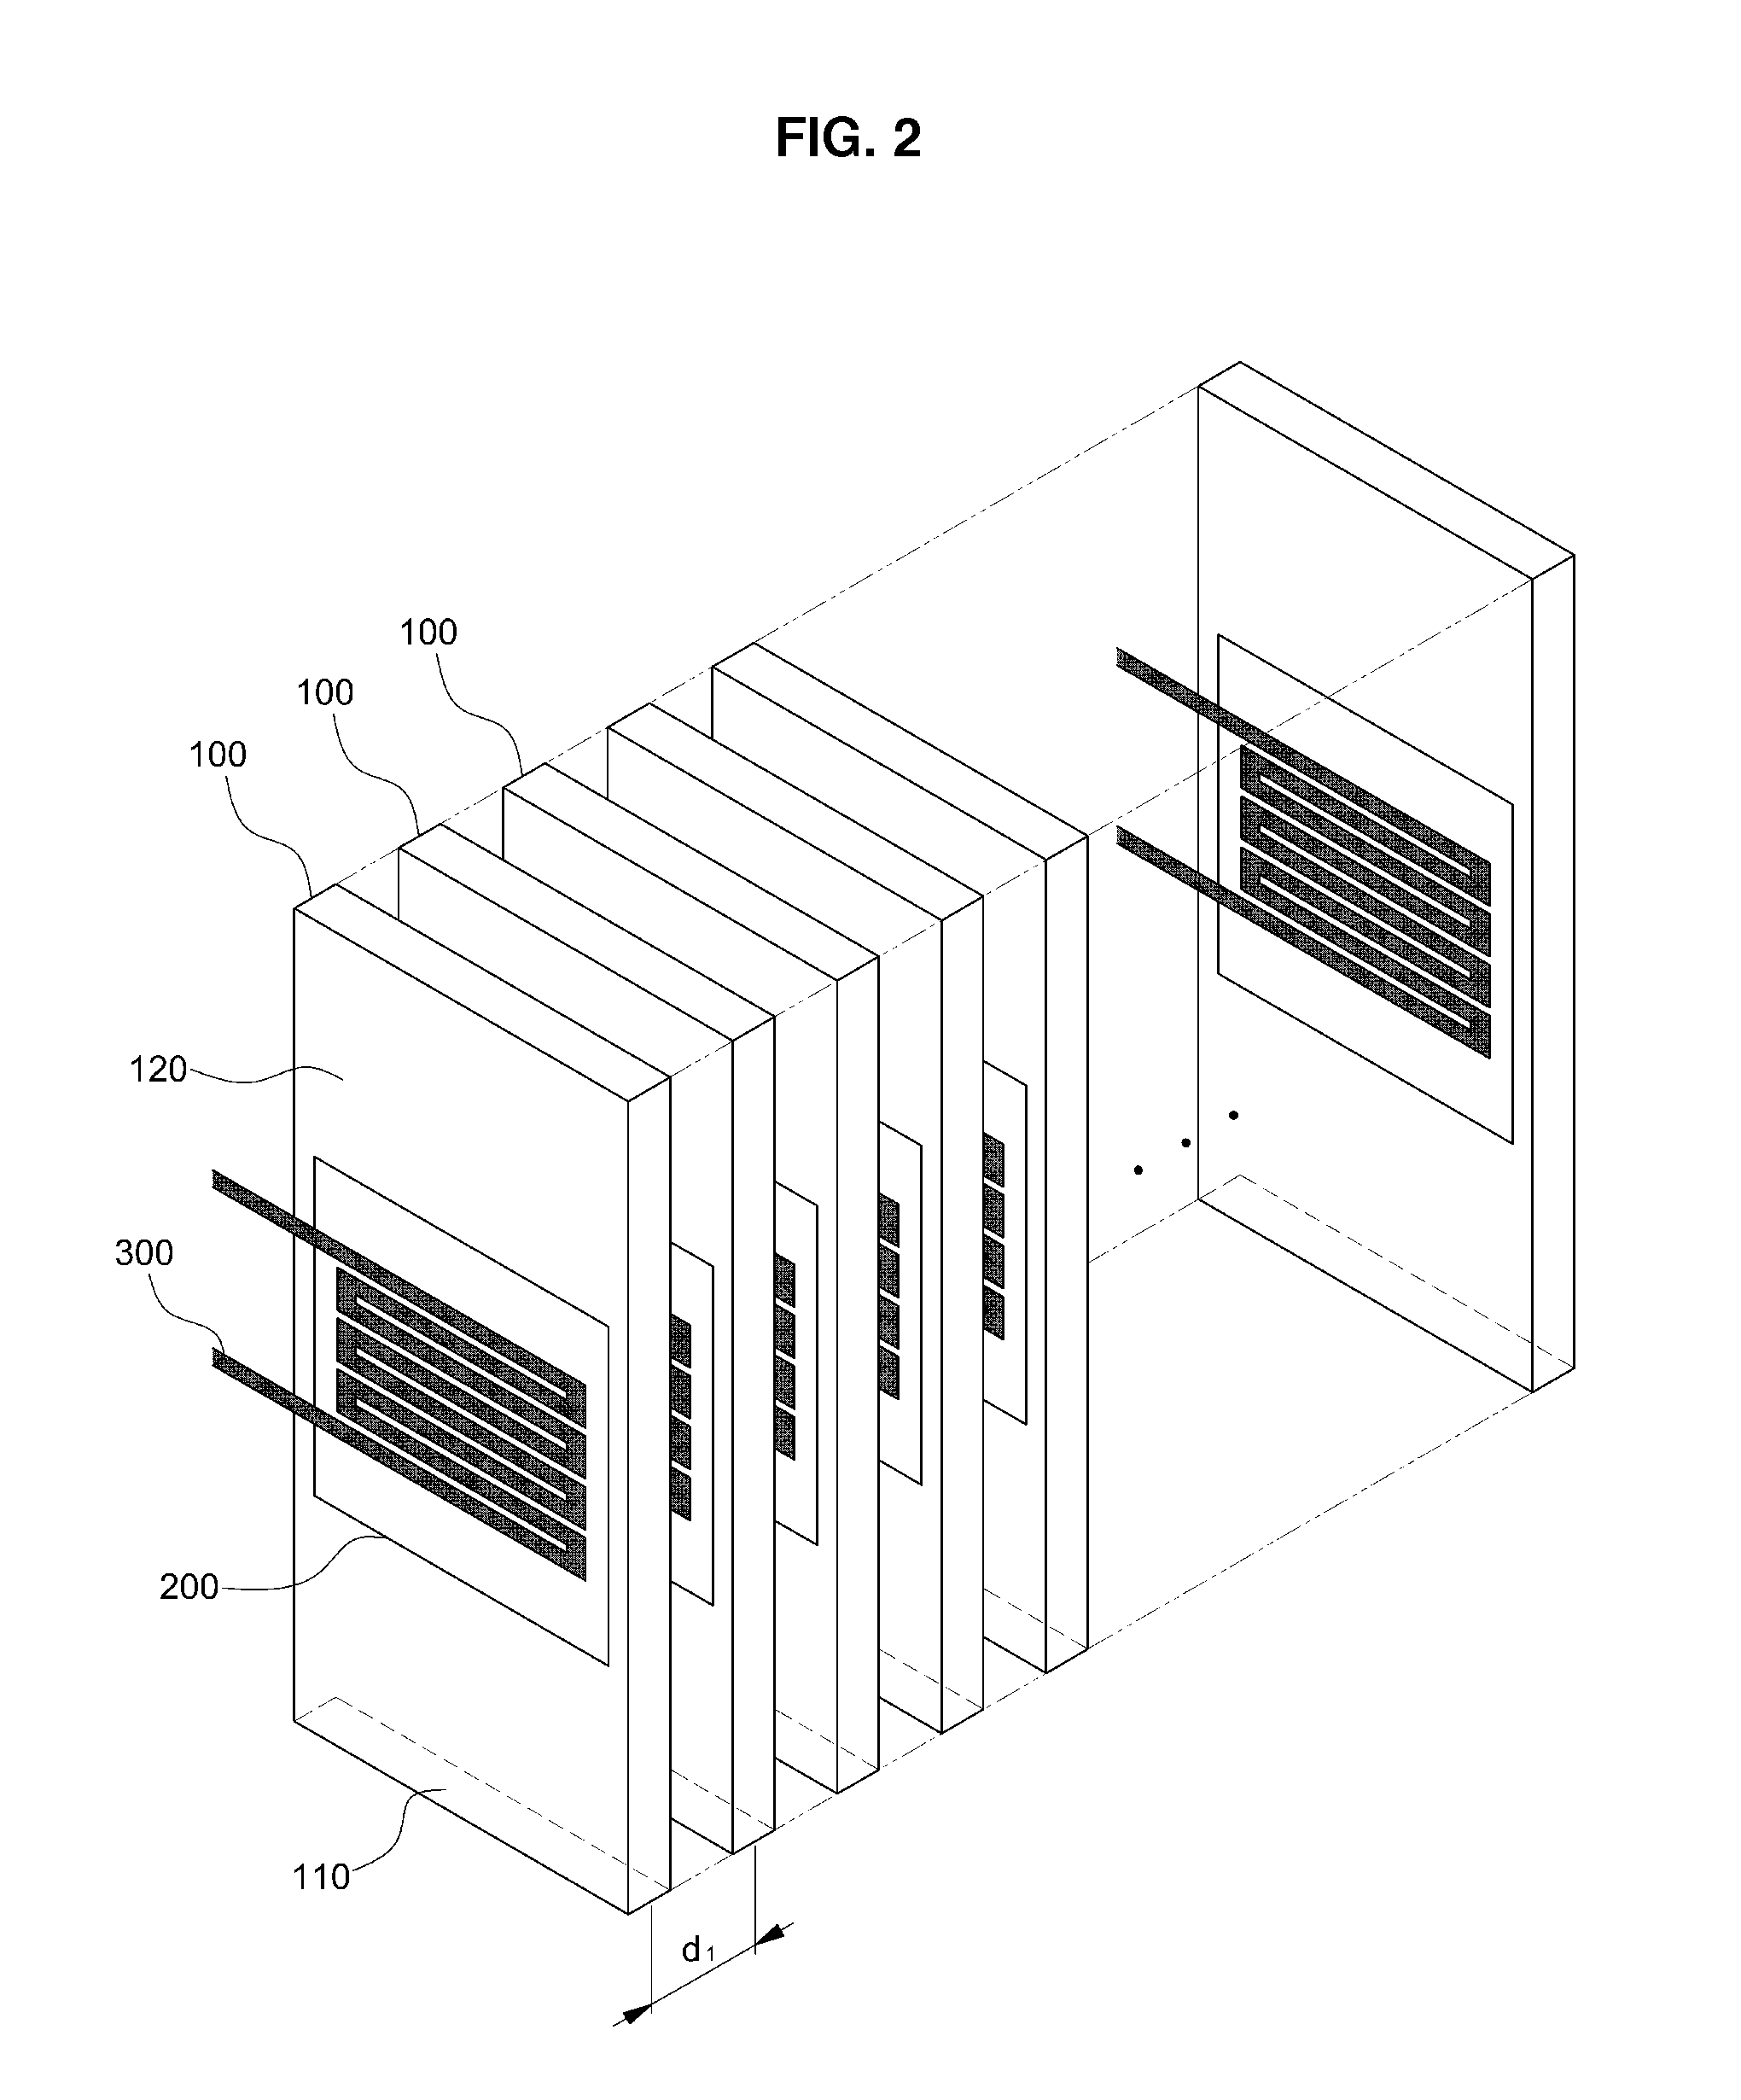 Magnetostrictive phased array transducer for transducing shear horizontal bulkwaves